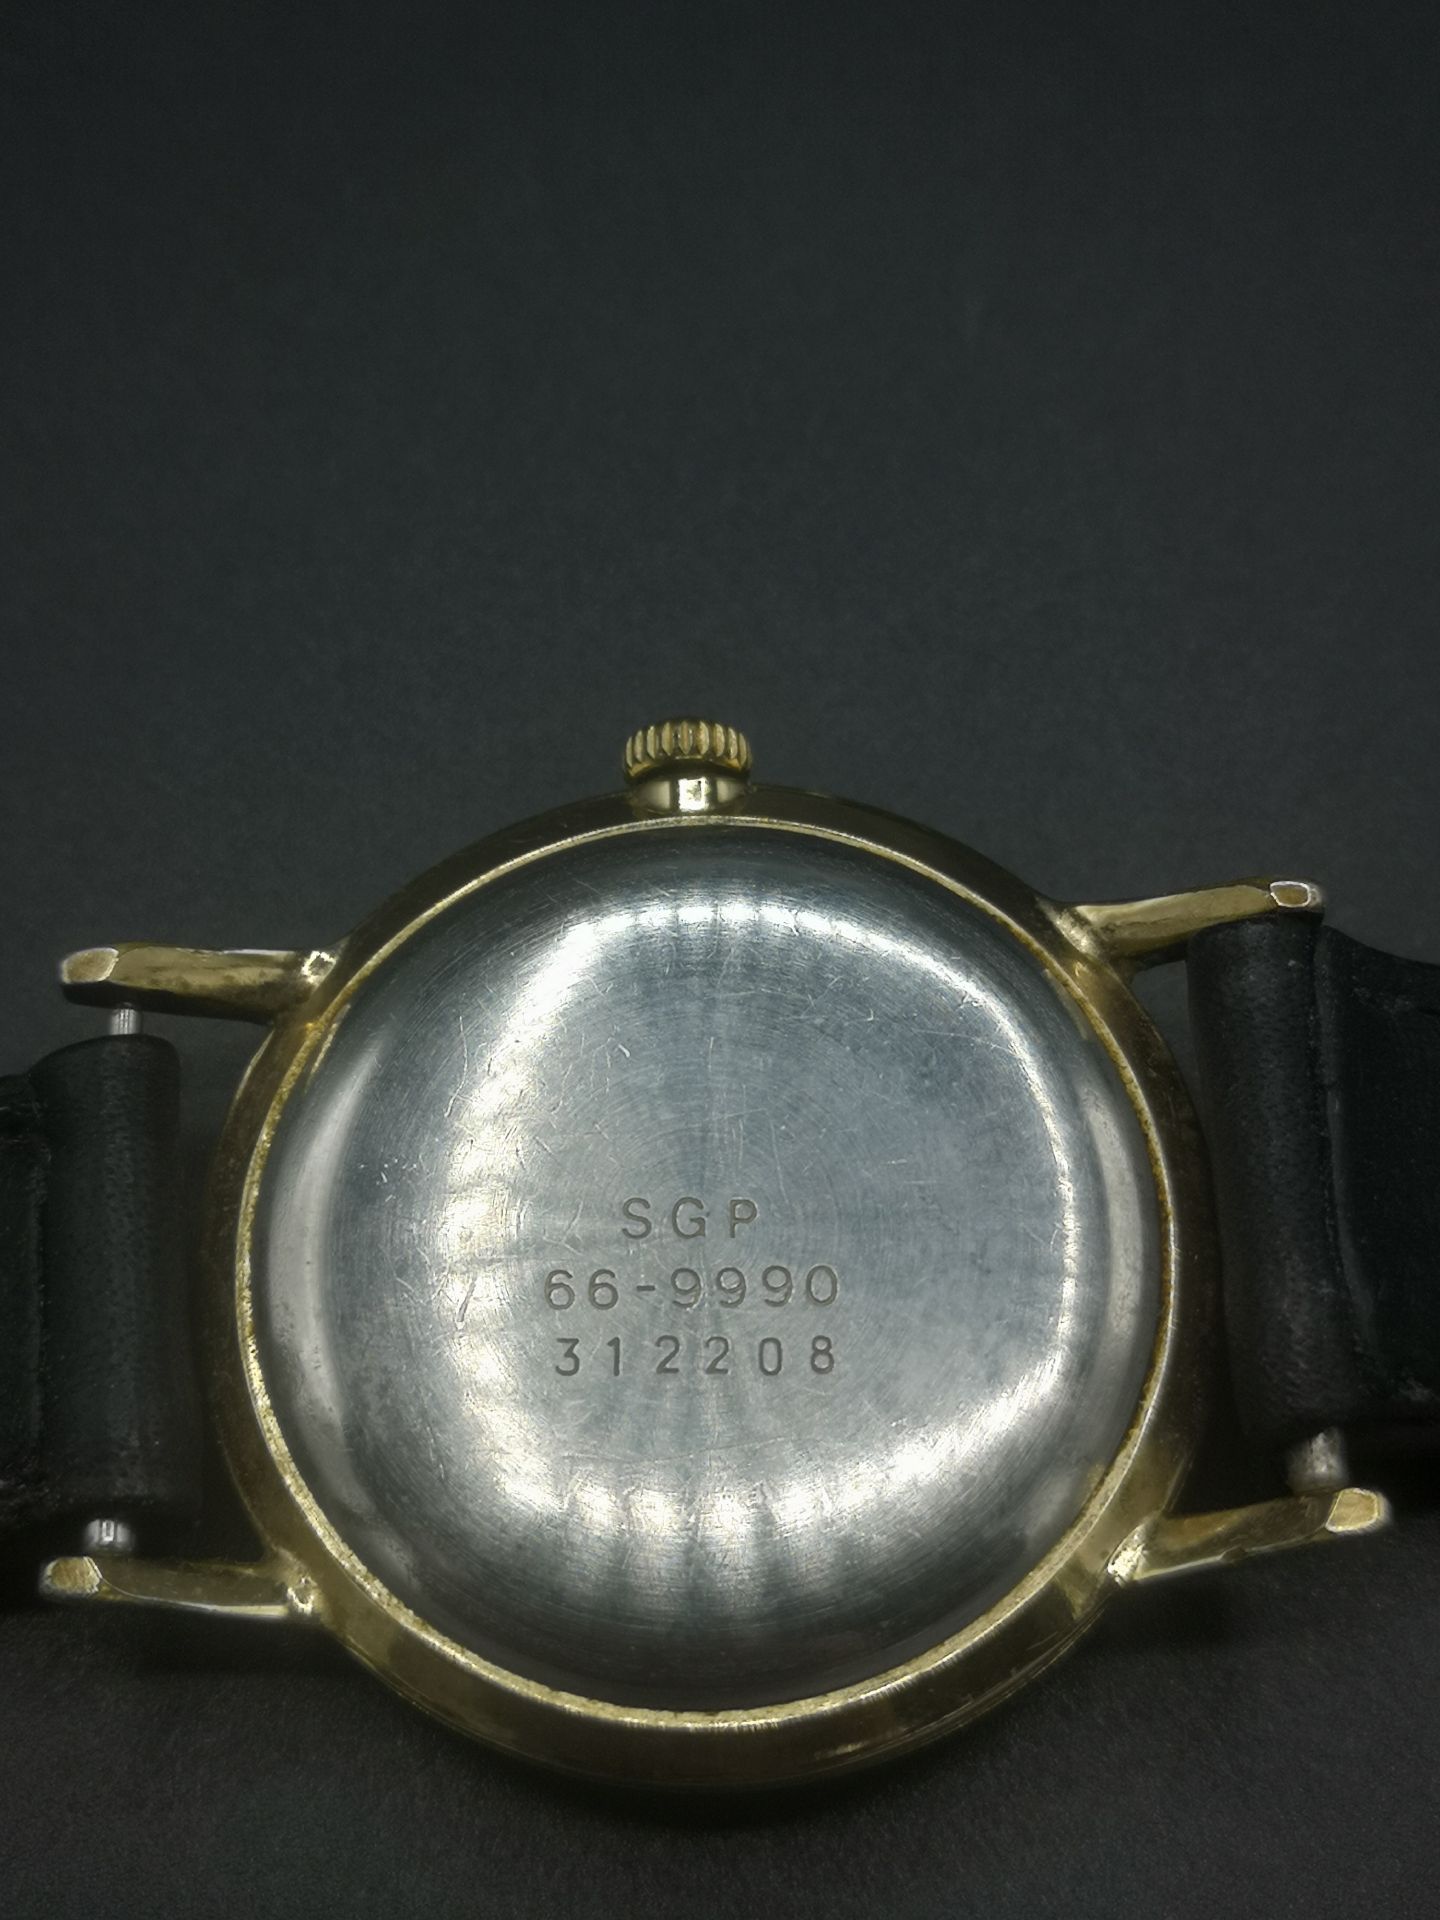 Seiko wrist watch - Image 4 of 4